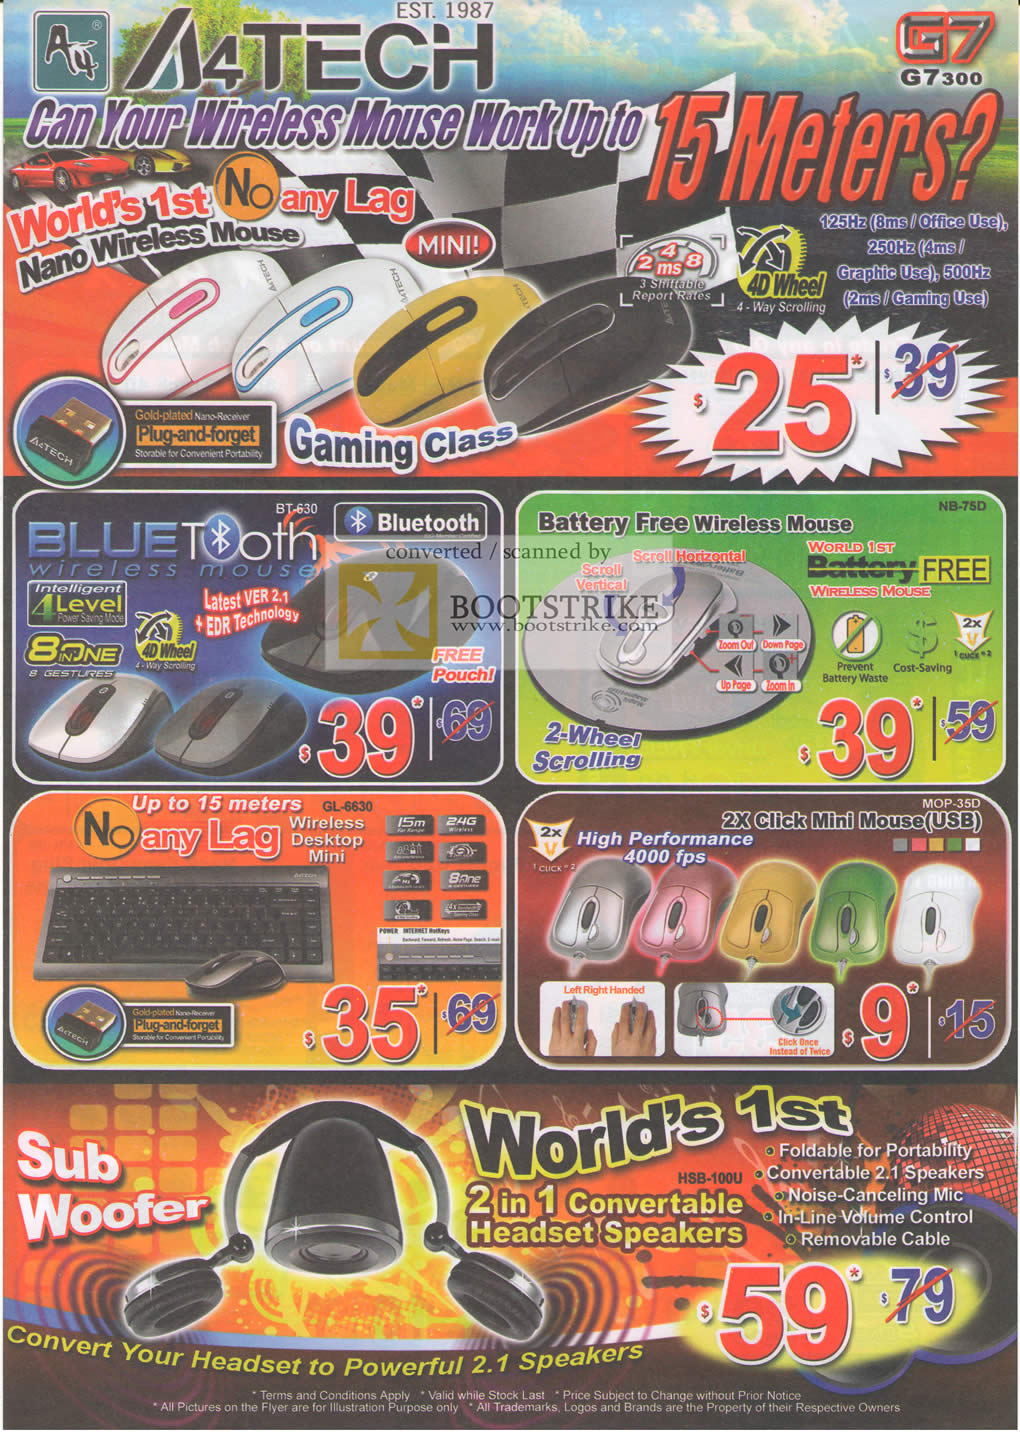 PC Show 2010 price list image brochure of Vertex A4Tech Nano Wireless Bluetooth Battery Free Keyboard Headset Speakers